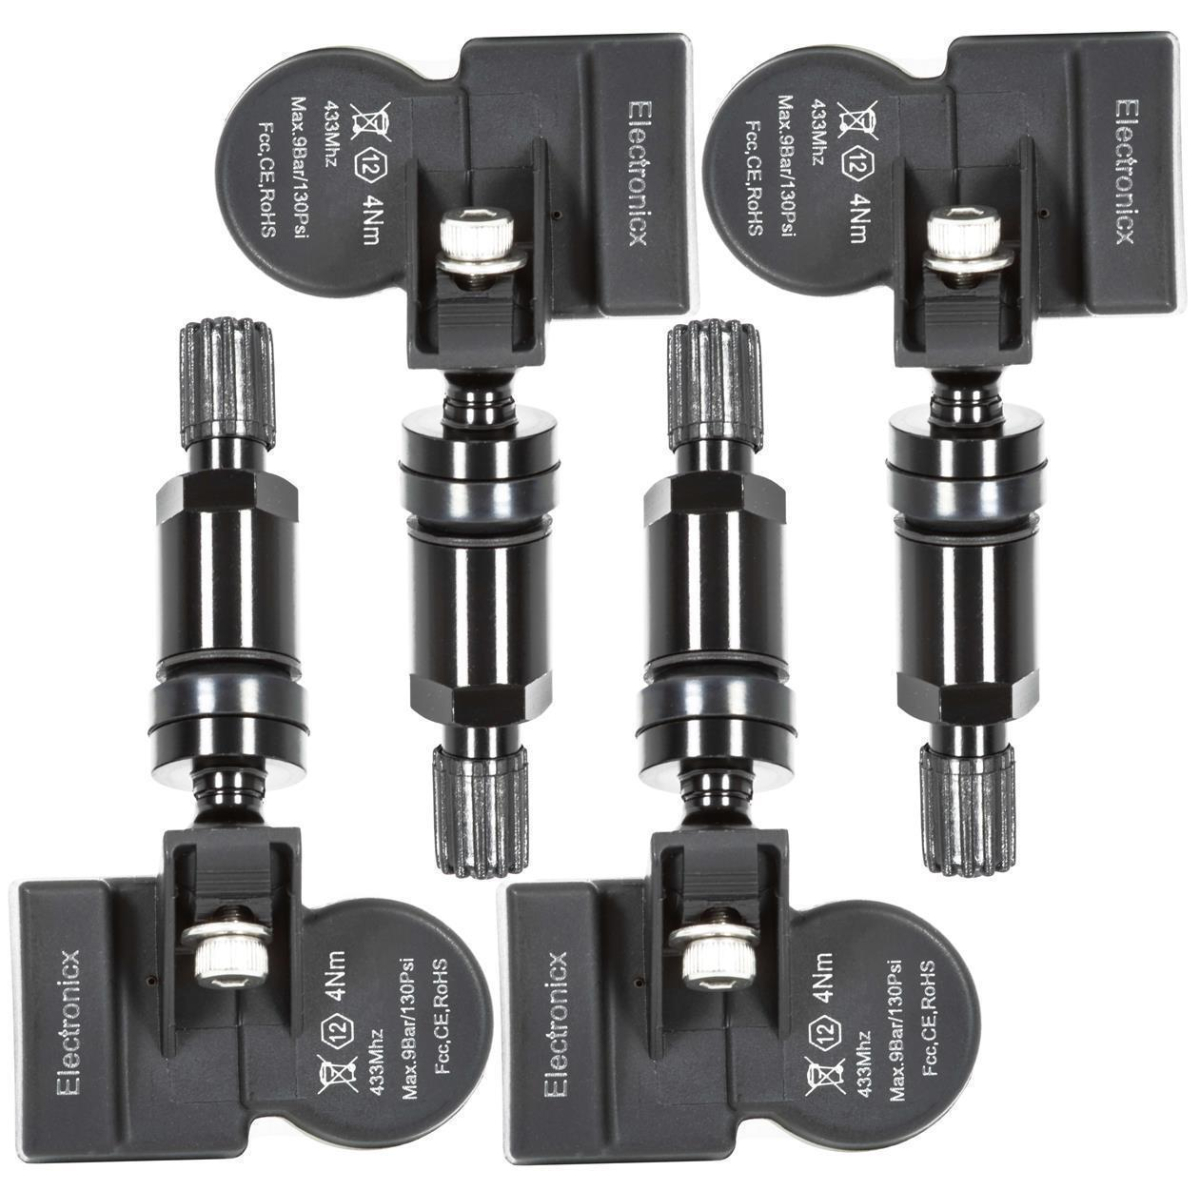 4x TPMS tire pressure sensors metal valve black for Saab 9-3 13327259 1331134 13348393